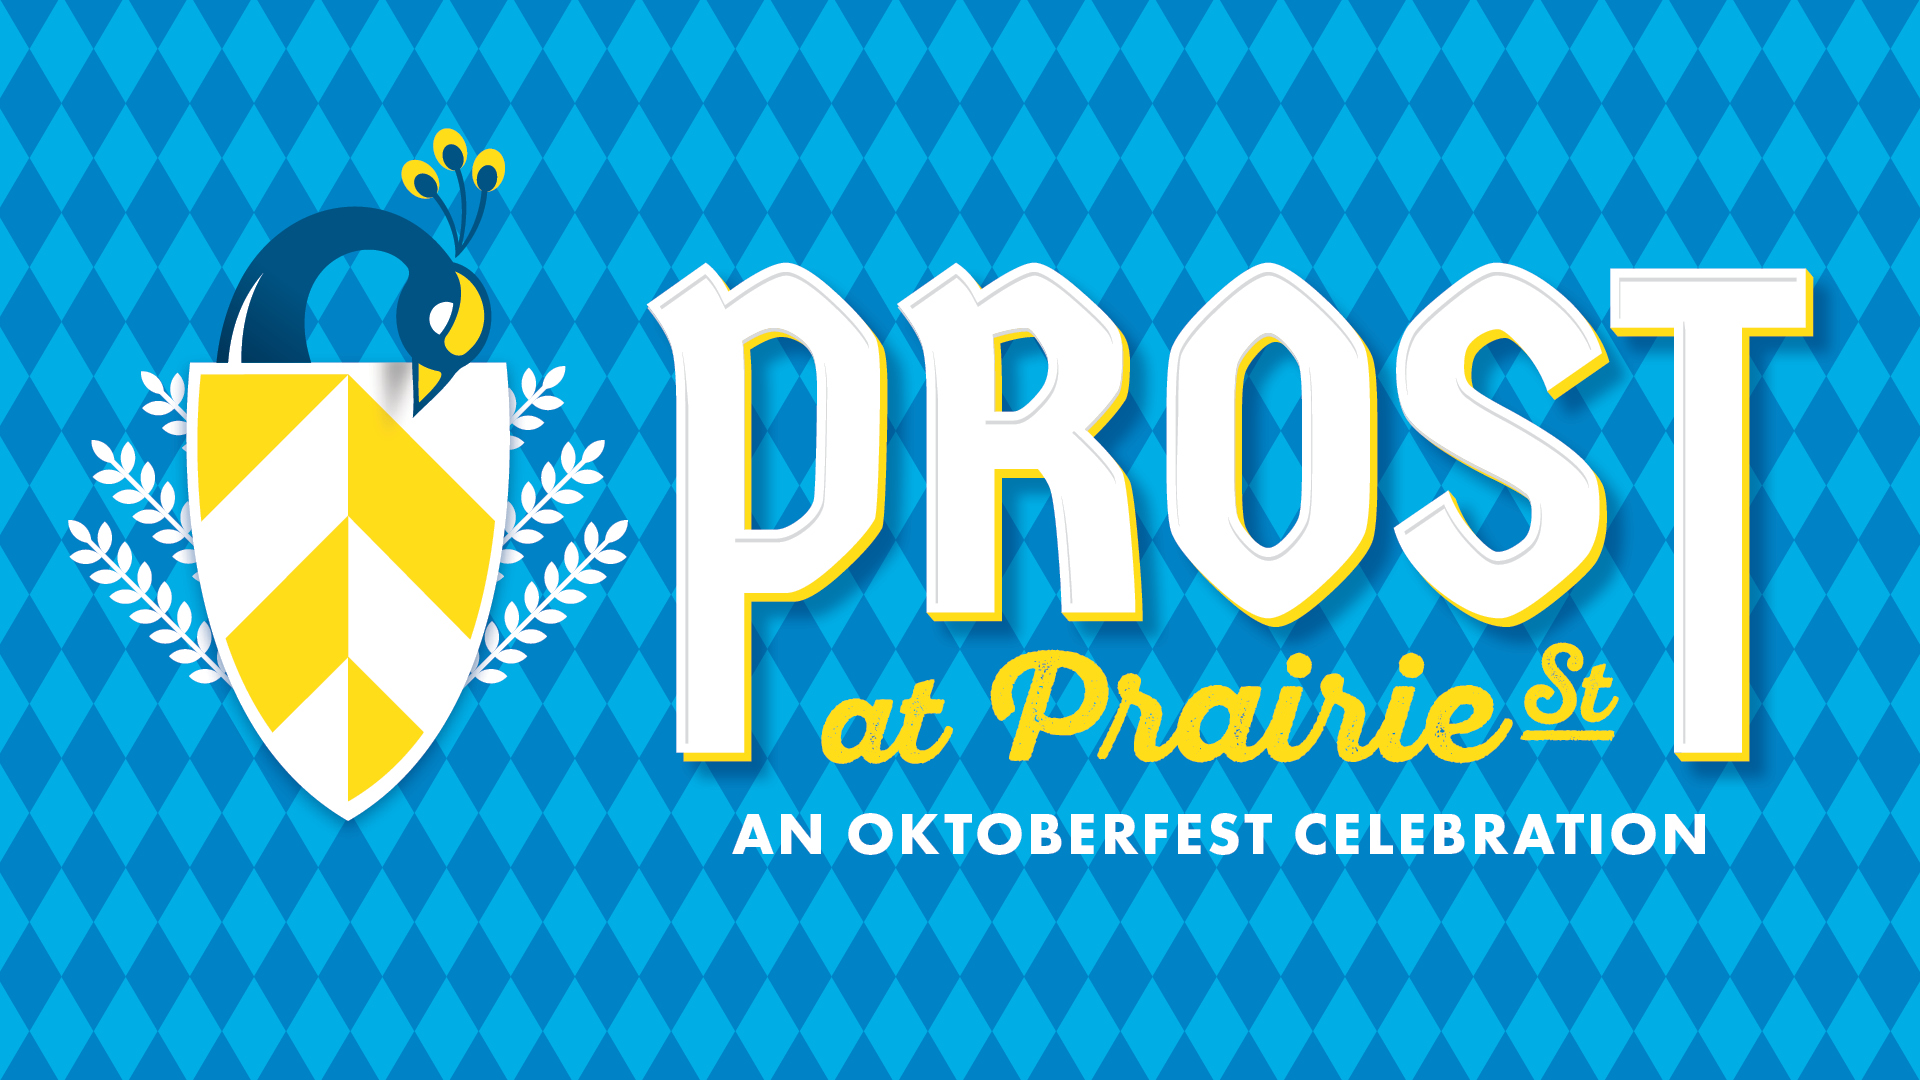 Prost at Prairie St - An oktoberfest celebration